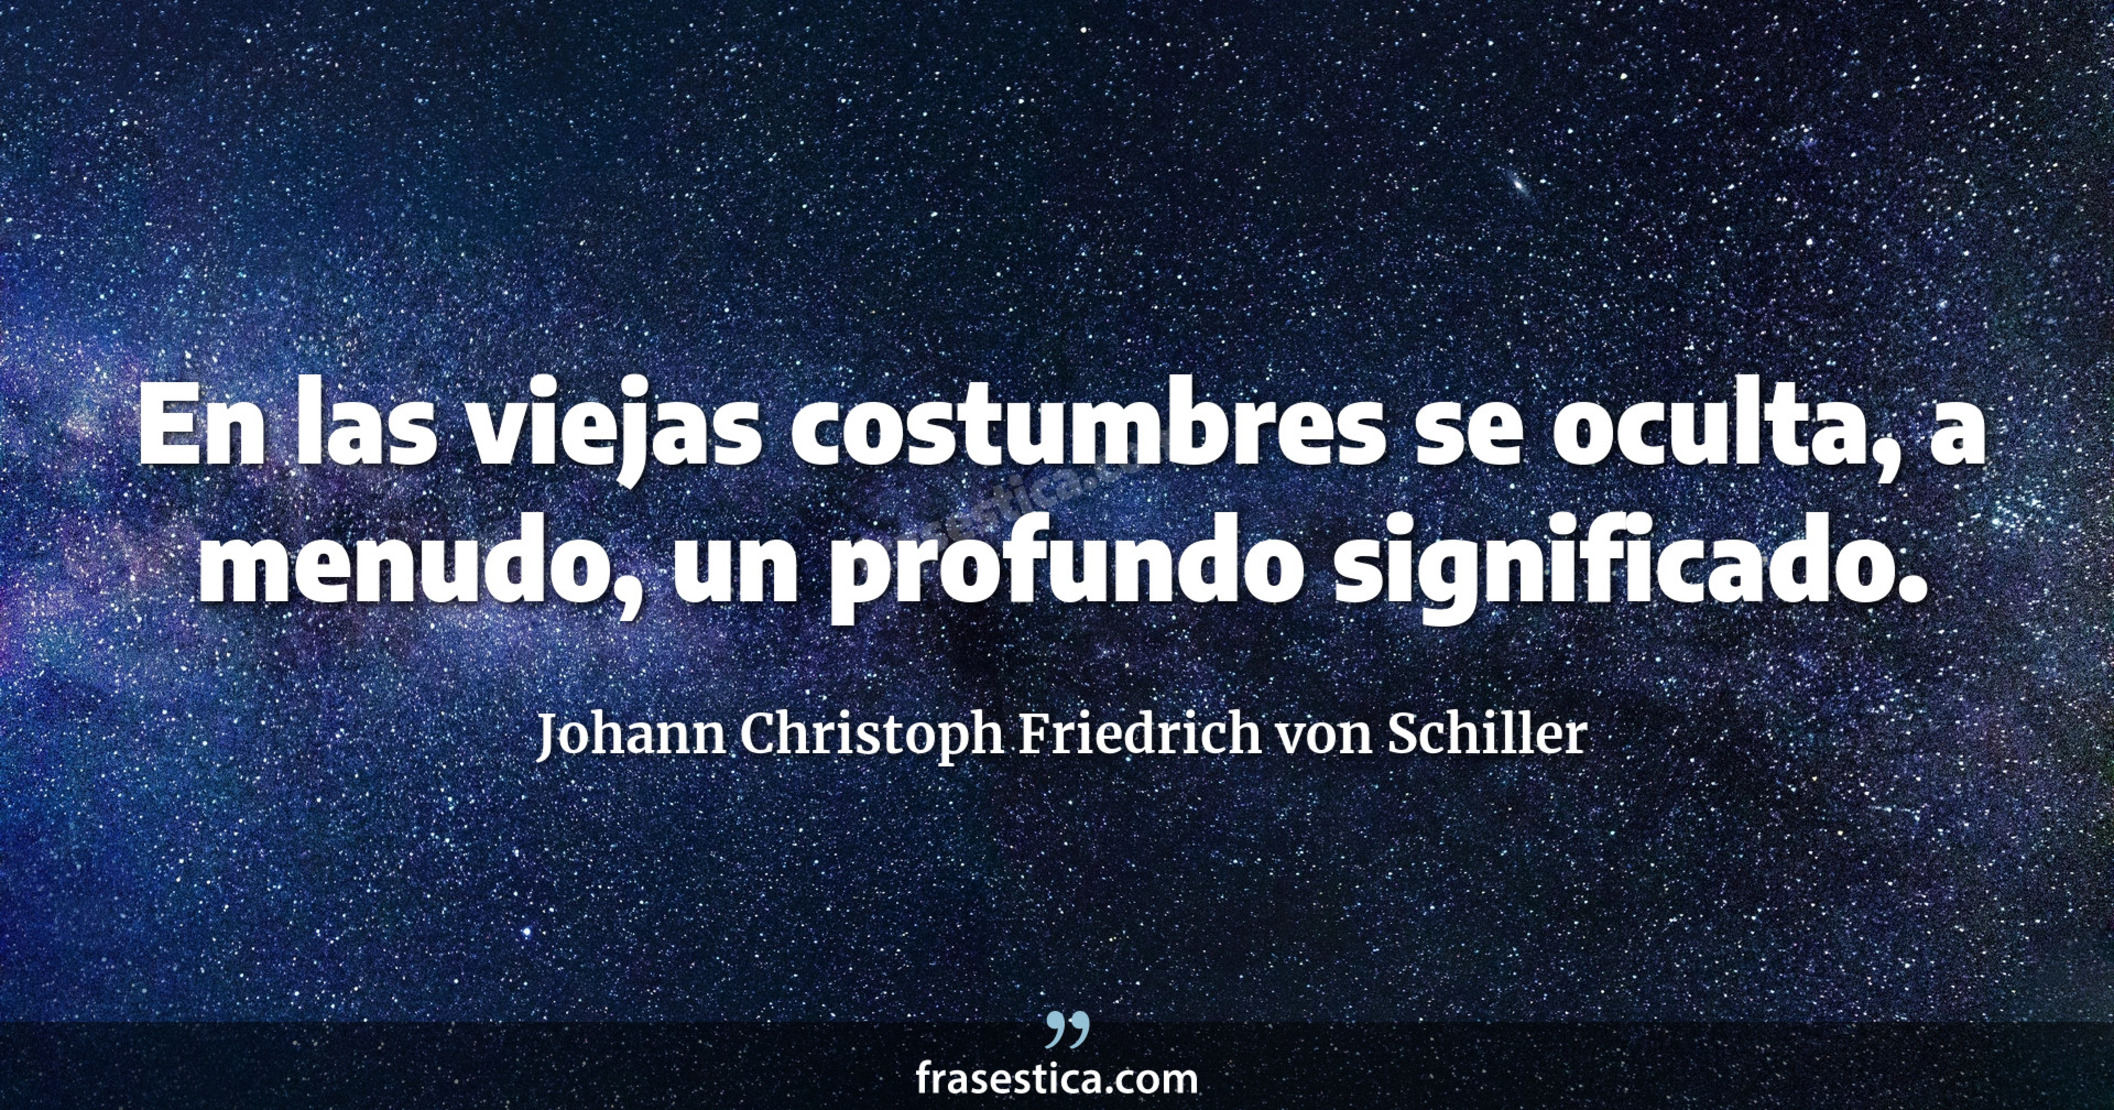 En las viejas costumbres se oculta, a menudo, un profundo significado. - Johann Christoph Friedrich von Schiller